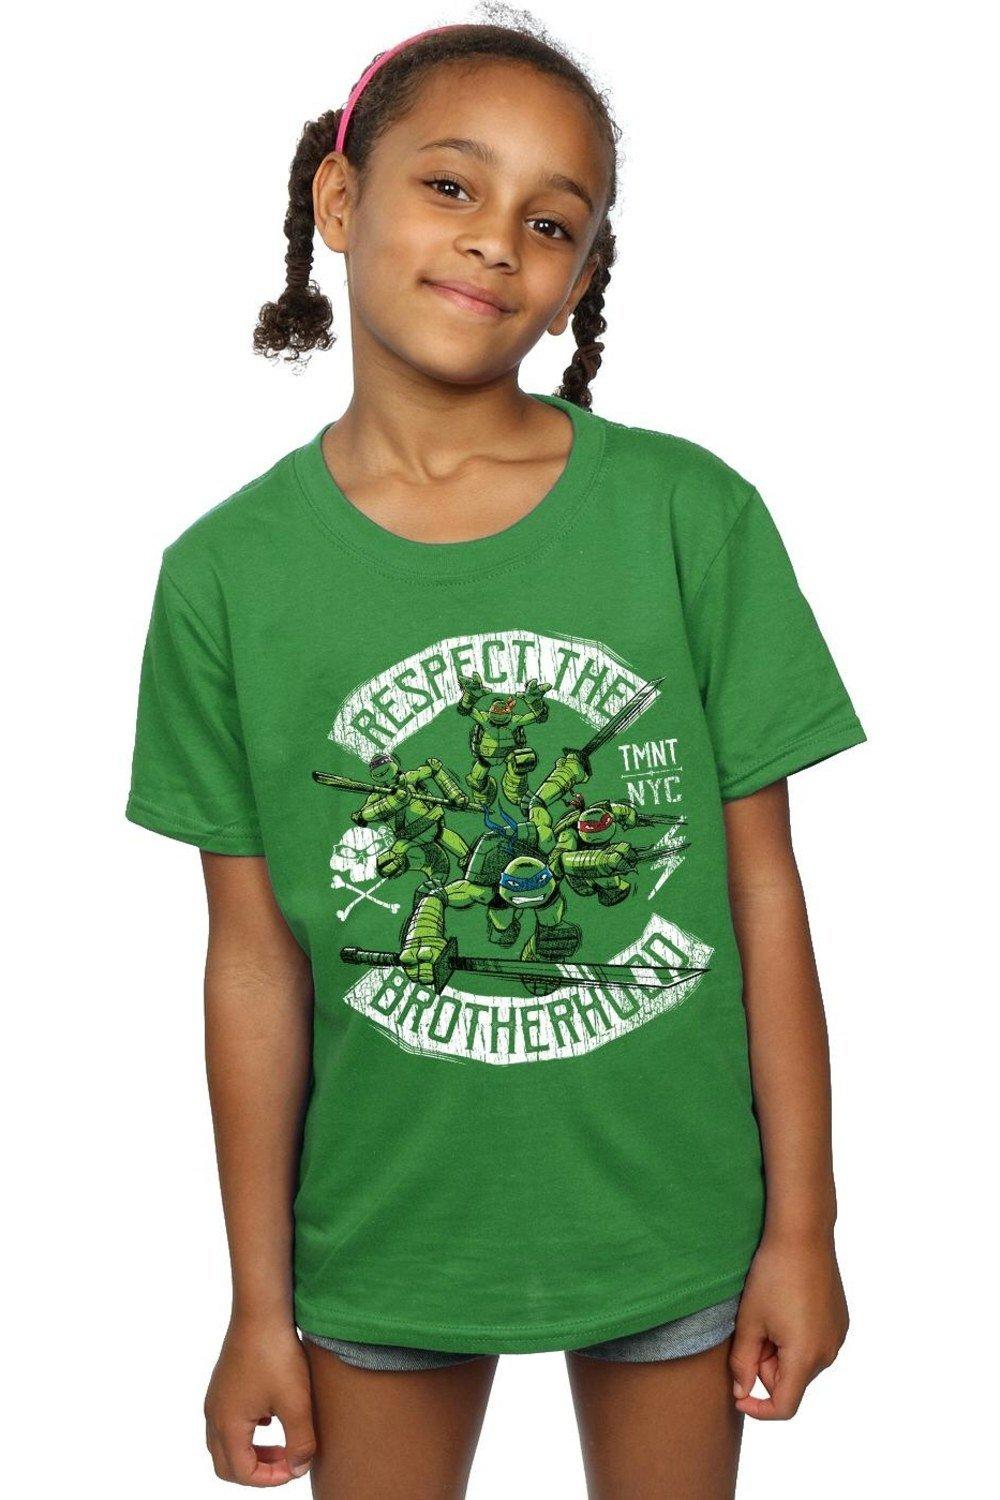 Respect The Brotherhood Cotton T-Shirt